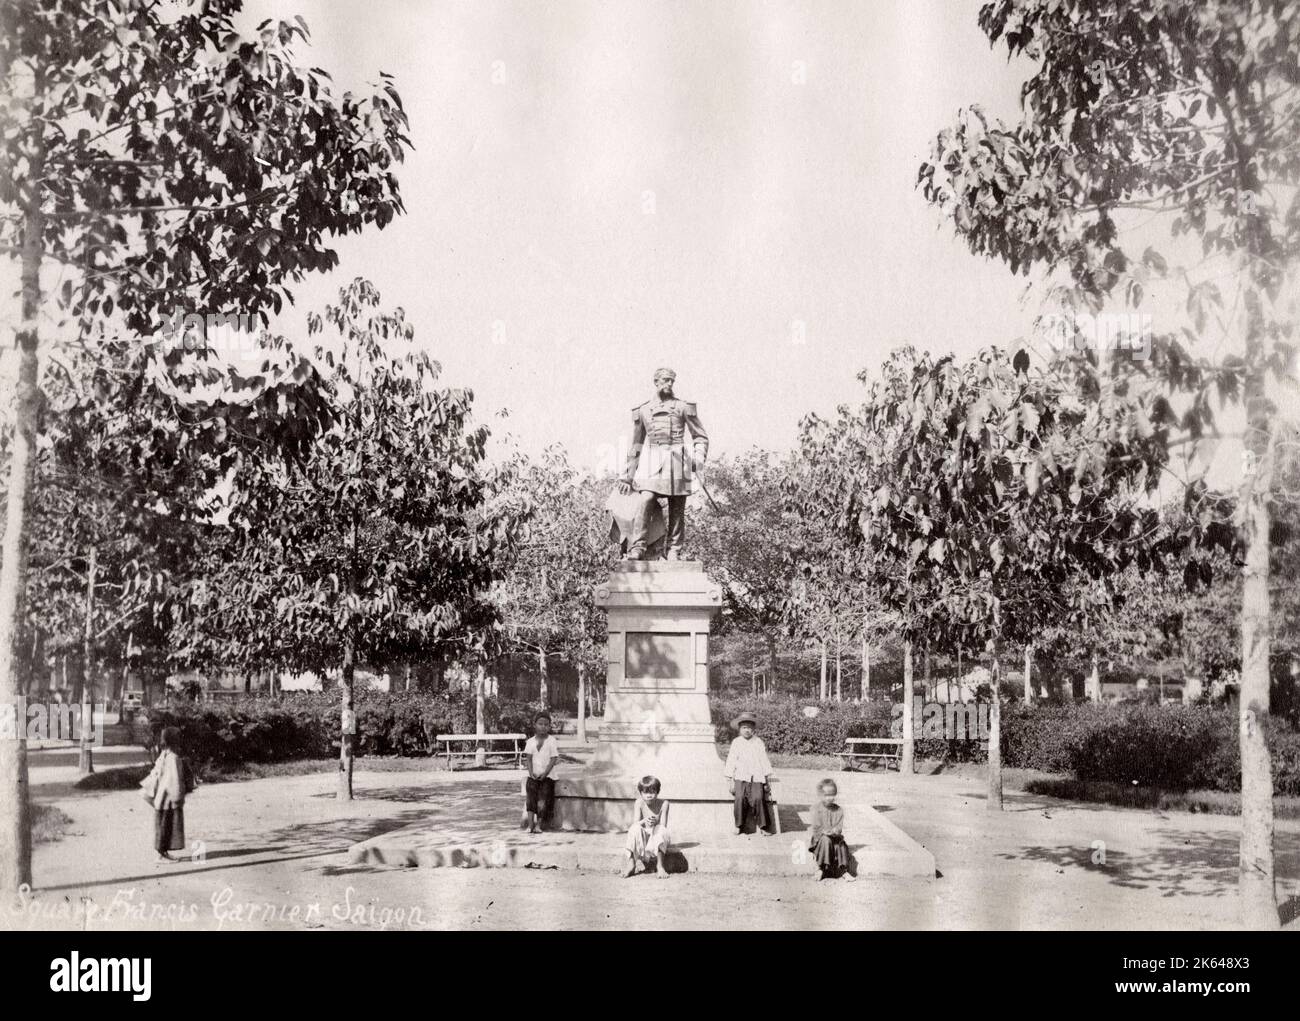 Vintage late 19th century photograph: Saigon, Ho Chim Minh City, Vietnam, Francis Garnier statue. Stock Photo